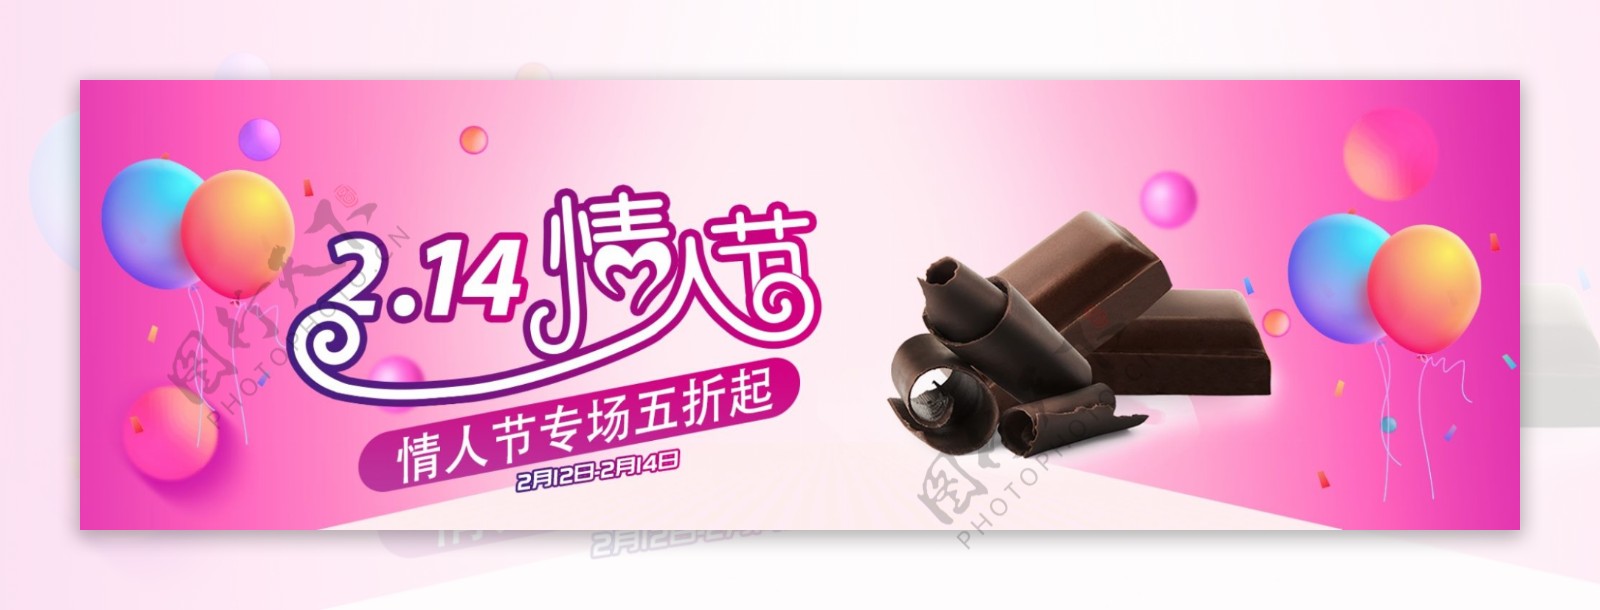 情人节巧克力淘宝banner设计